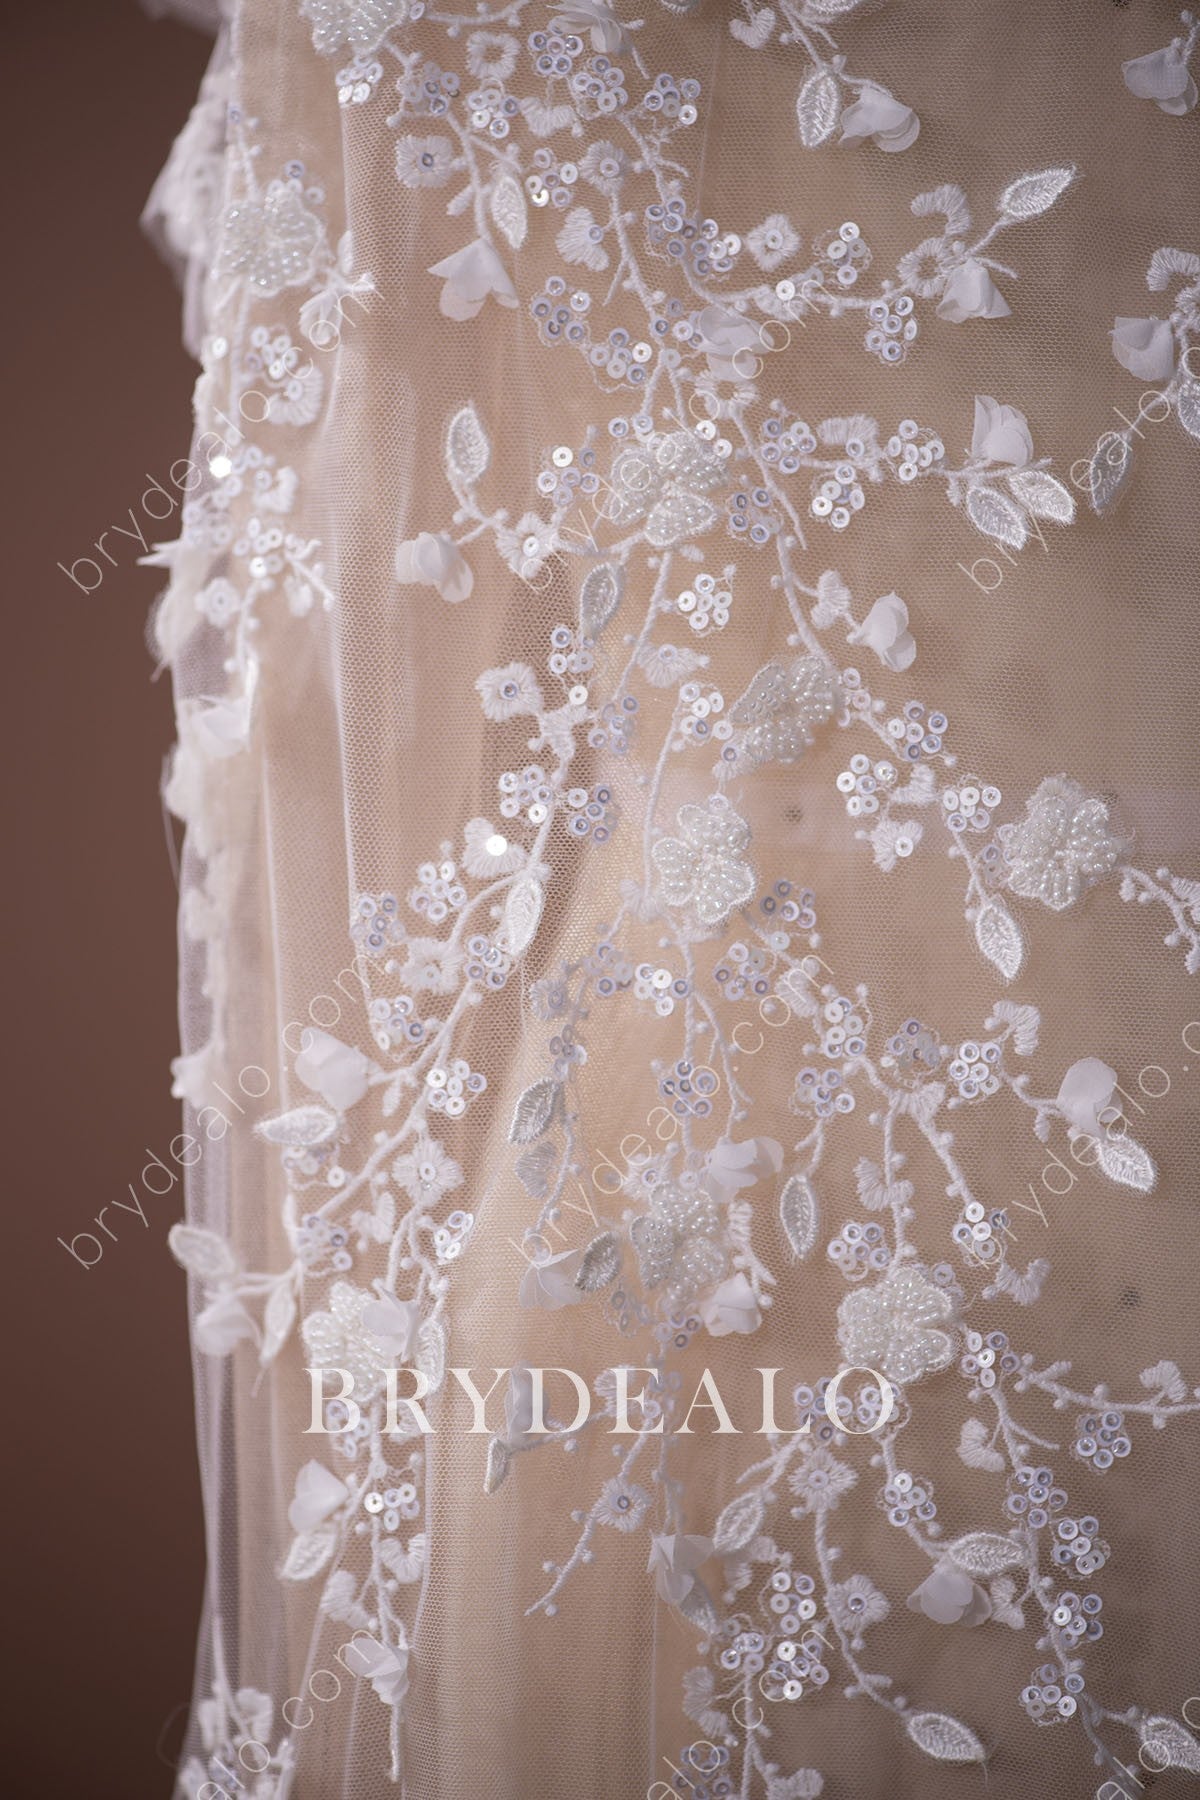 Exquisite Sequin Pearls Bridal Lace Fabric online